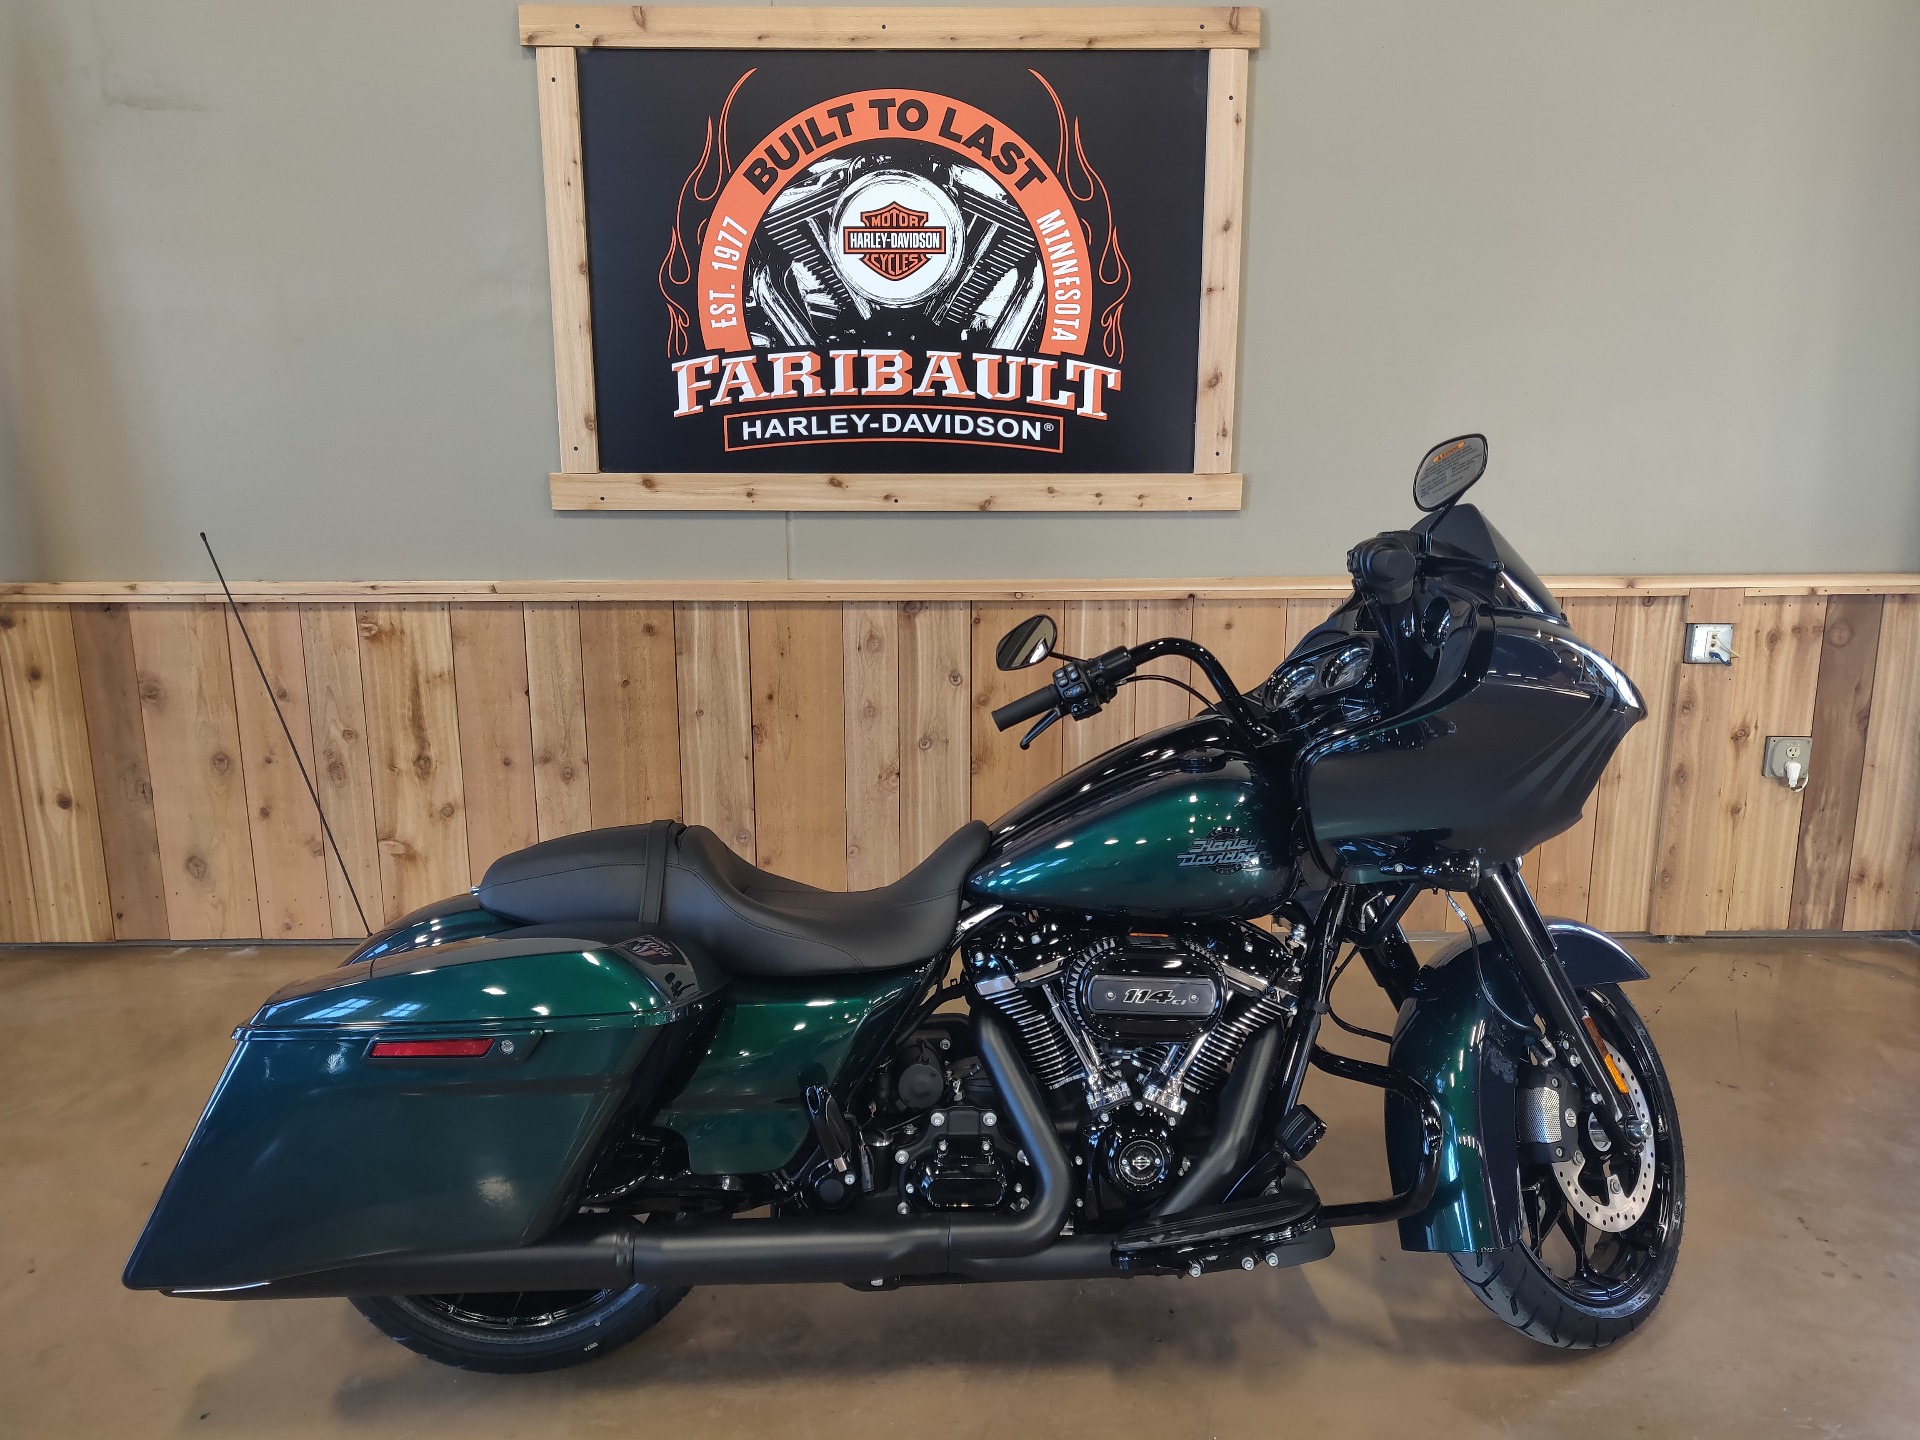 New 2021 Harley Davidson Road Glide Special Motorcycles In Faribault Mn To634468 Snake Venom Black Pearl Option